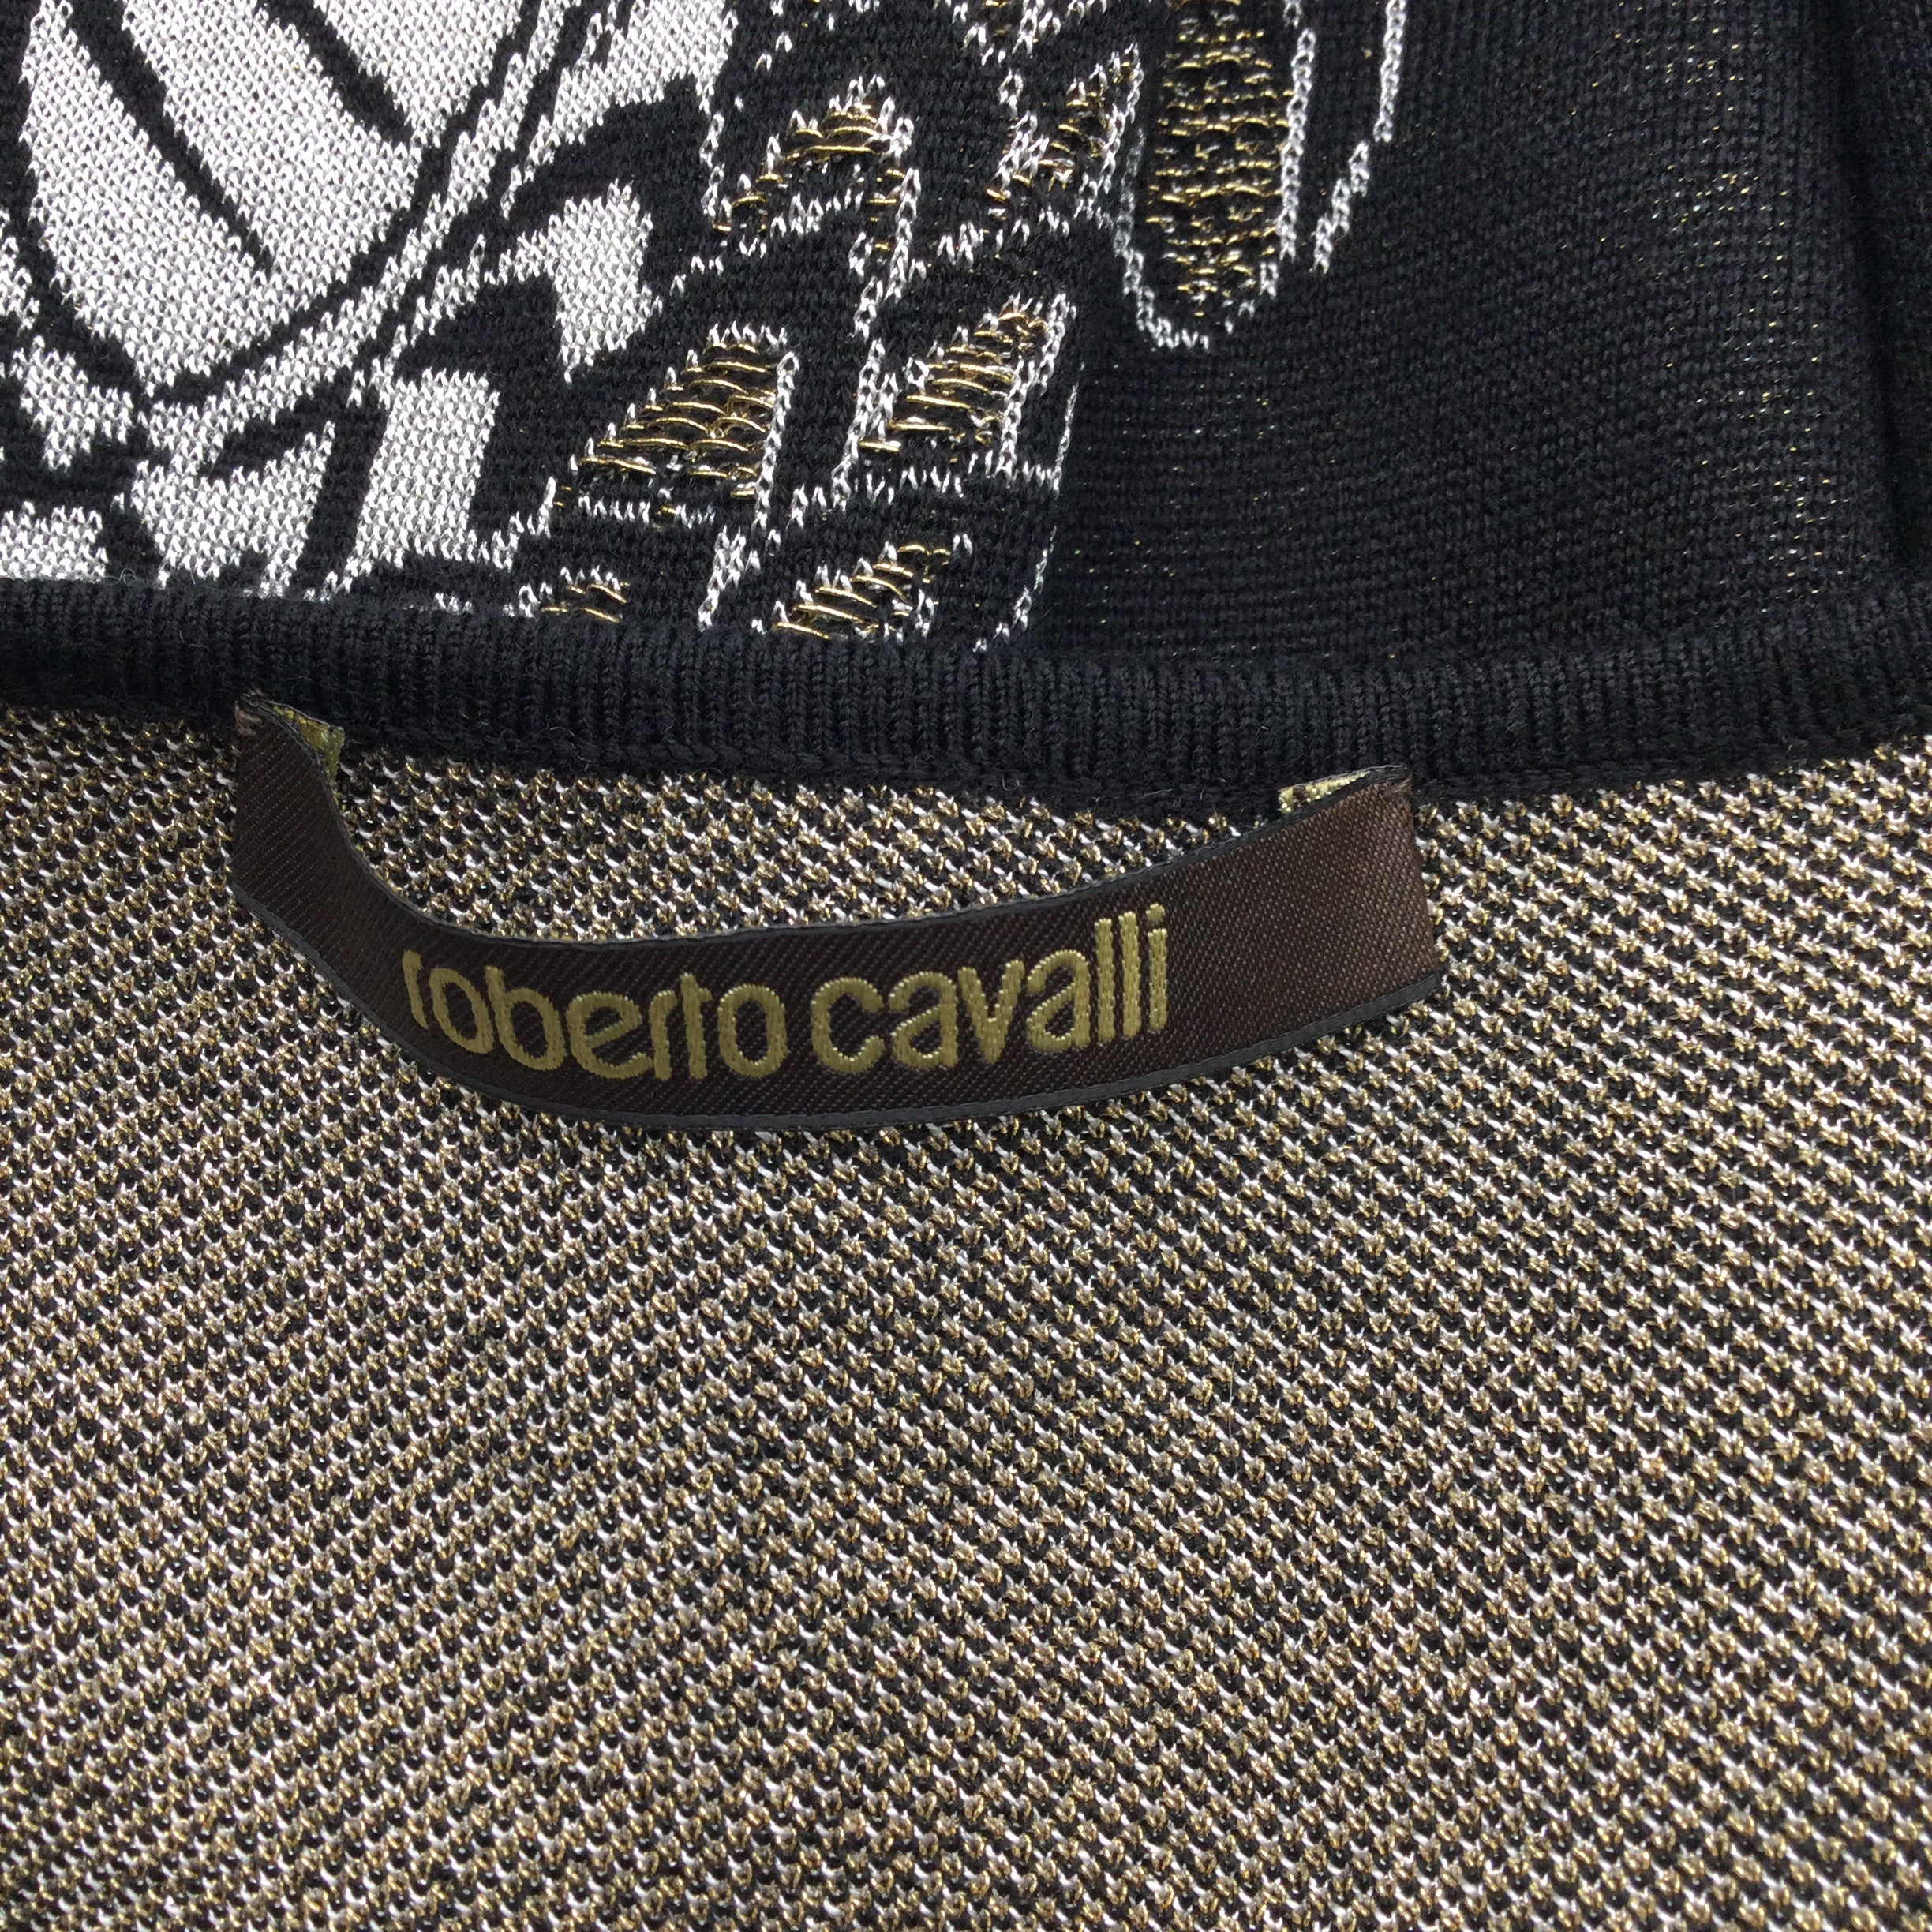 Roberto Cavalli Black / Silver Metallic Sleeveless Knit Cocktail Dress